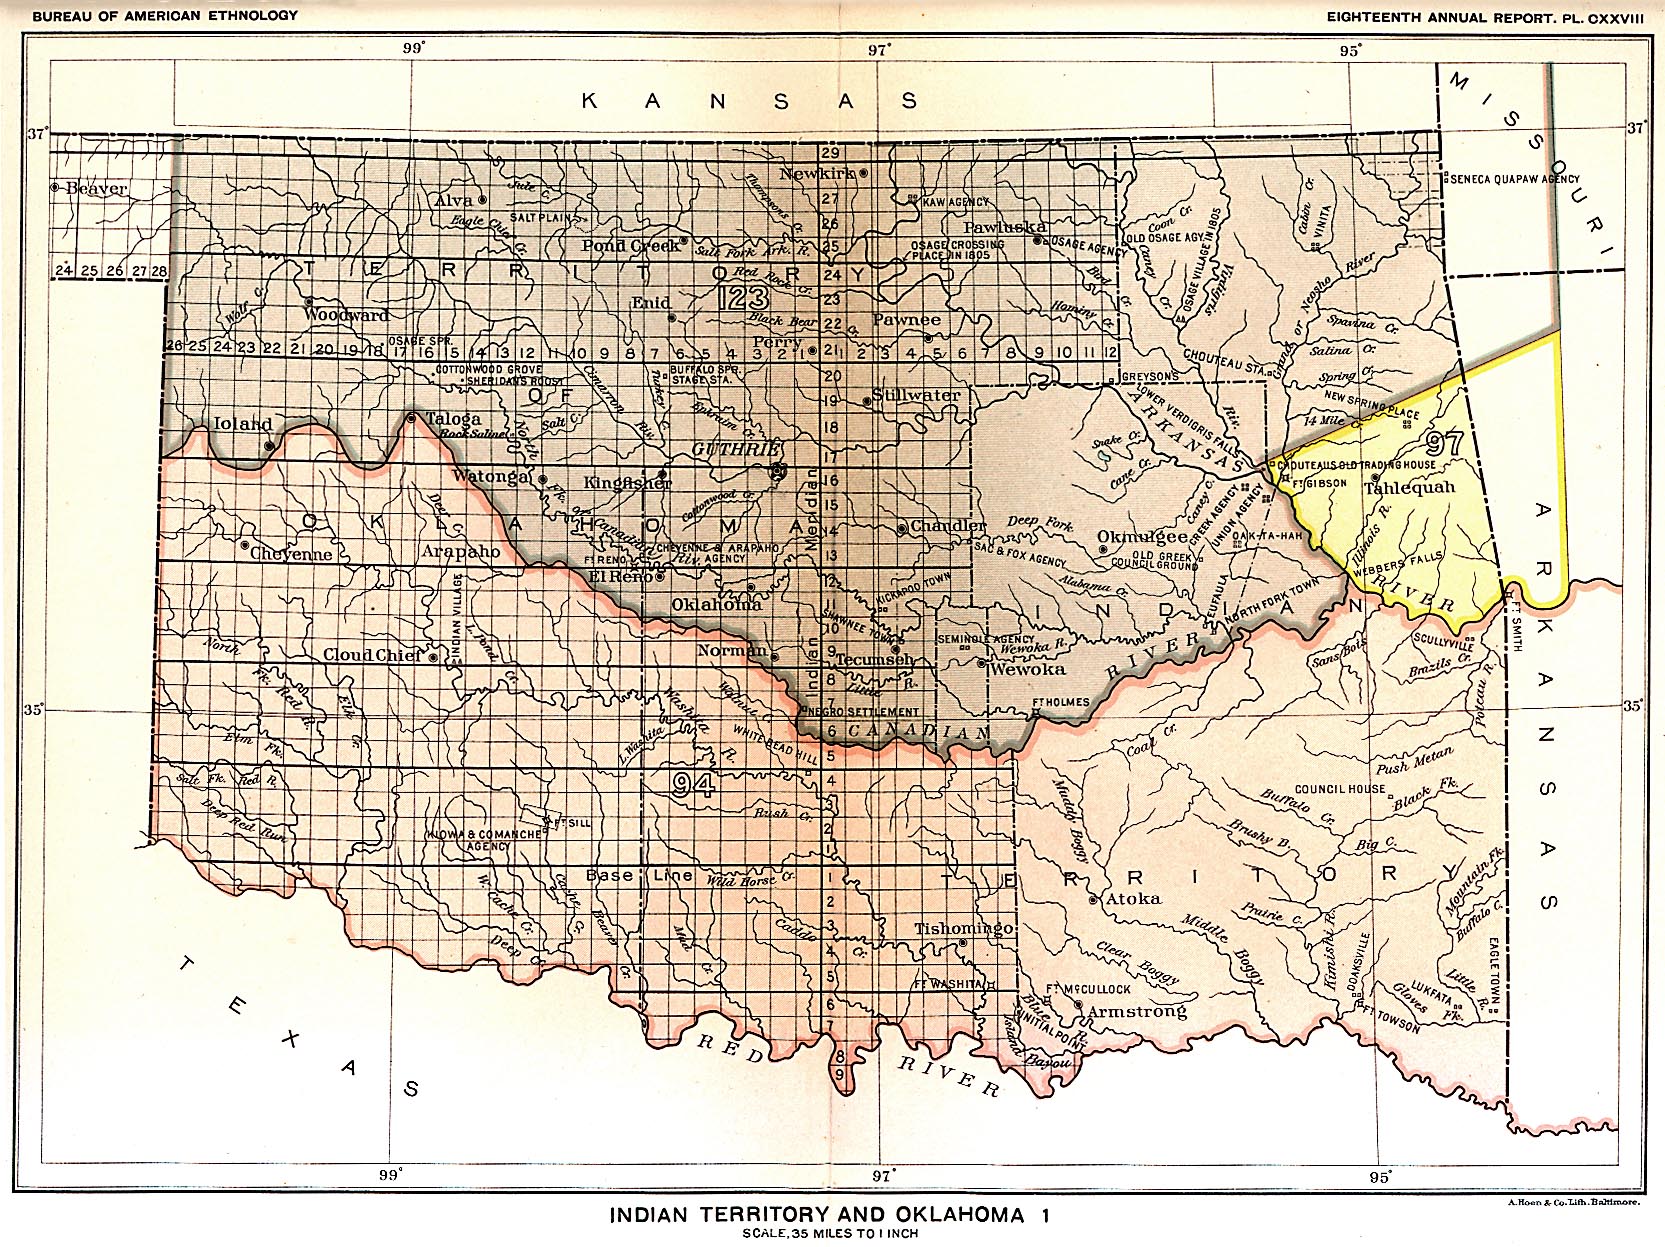 Indian Territory & Oklahoma 1, Map 
21